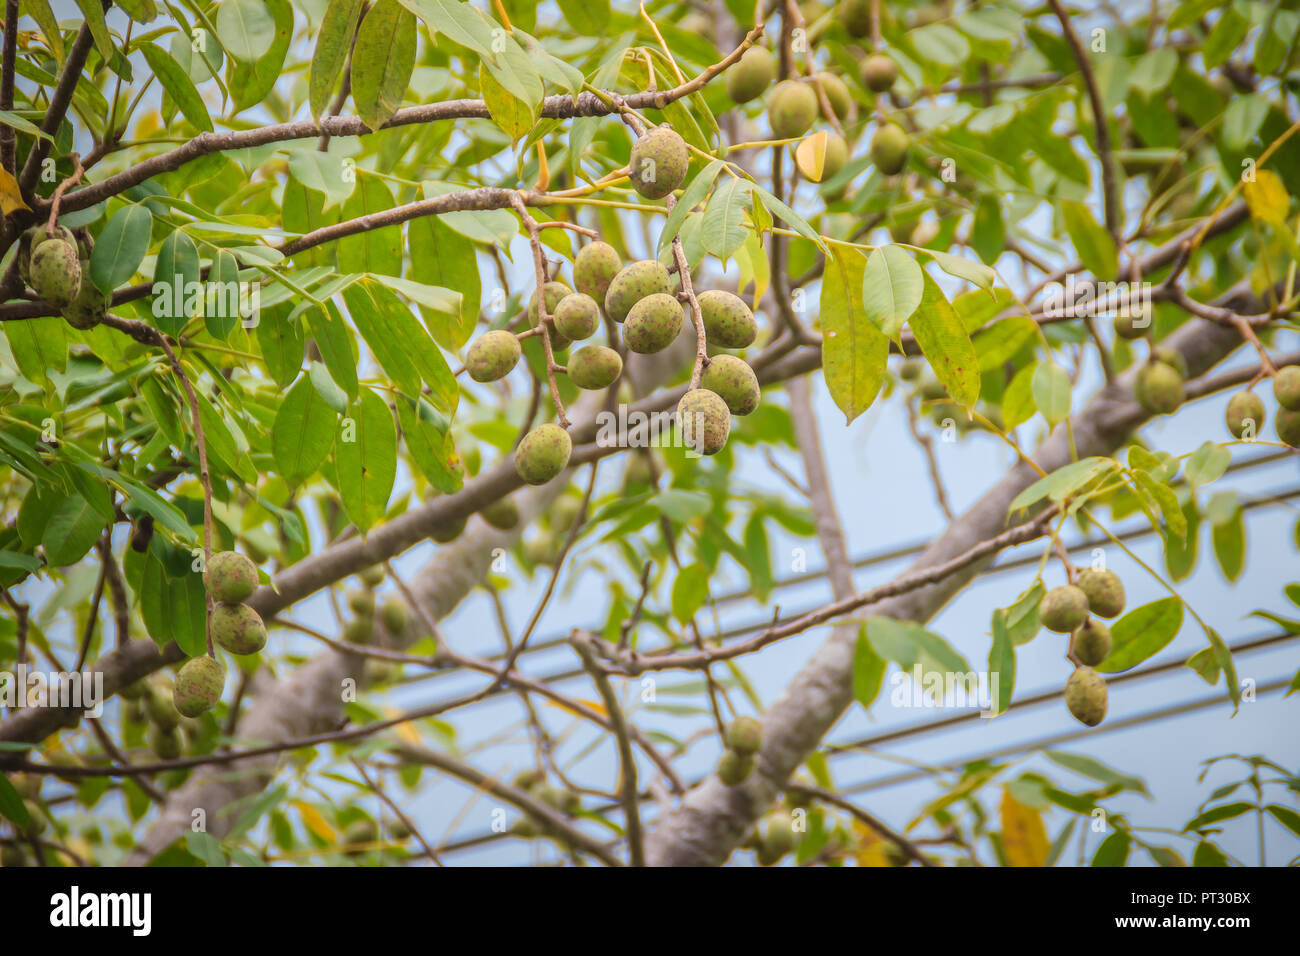 Organic green hog plum (Spondias pinnata) fruits on tree. Spondias pinnata is found in lowlands and hill forests of Southeast Asia. Stock Photo